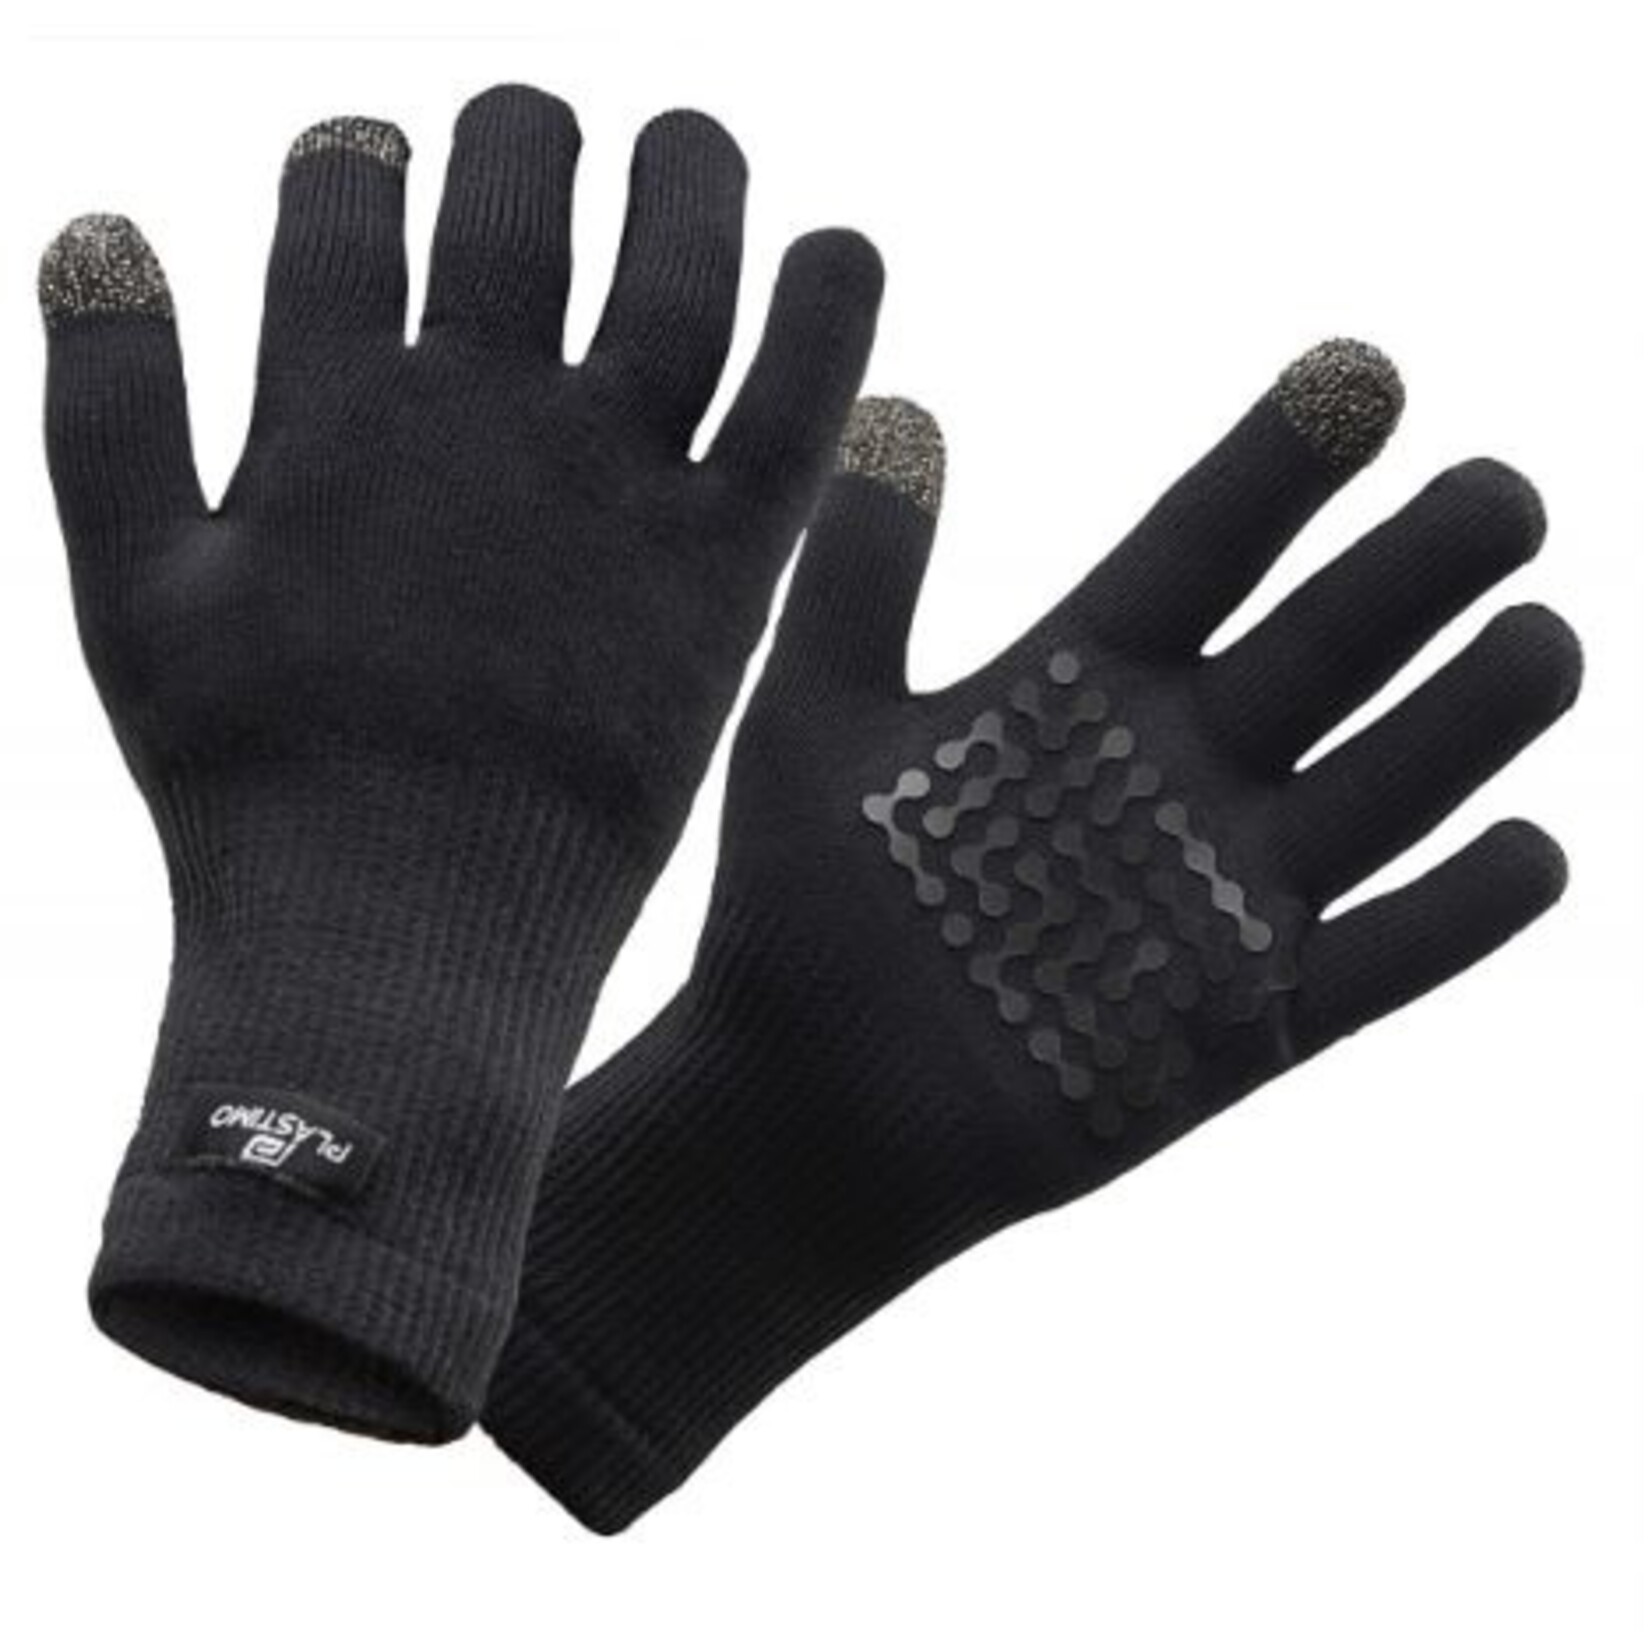 Plastimo Activ waterproof gloves m merino